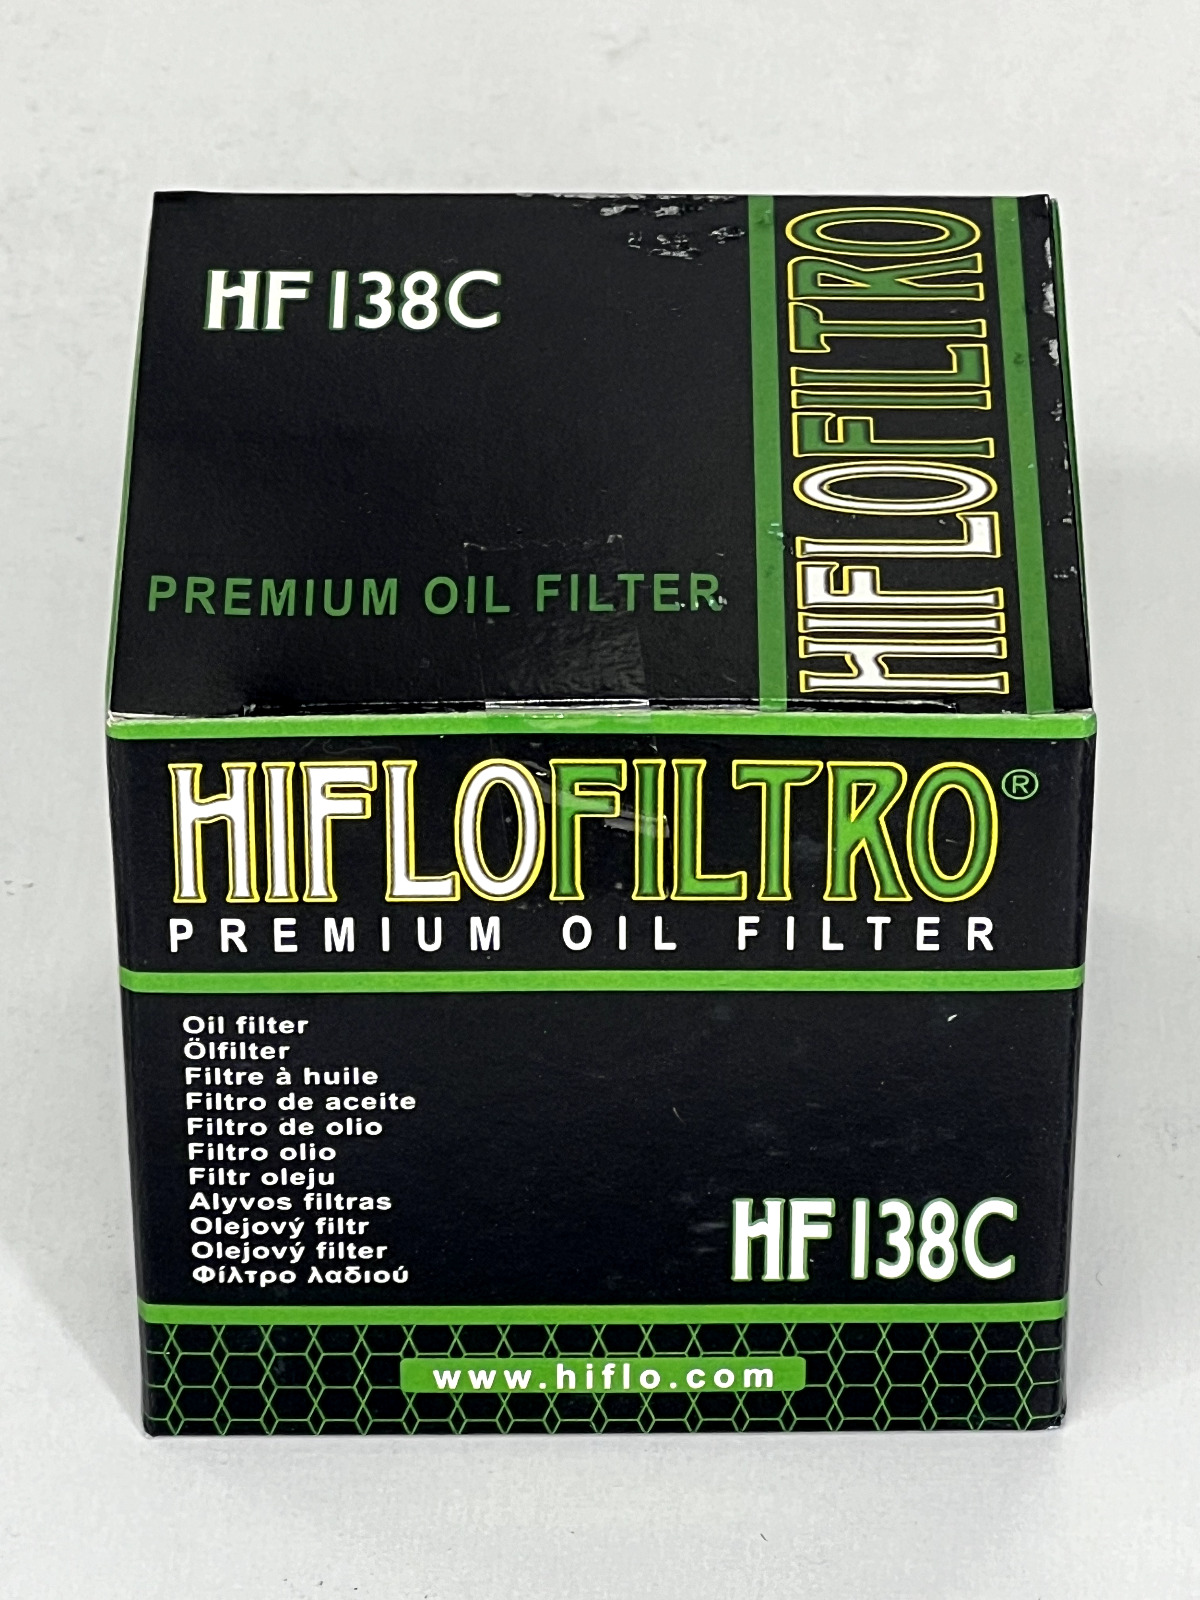 Hiflo Filtro Premium Oil Filter HF138C - NEW